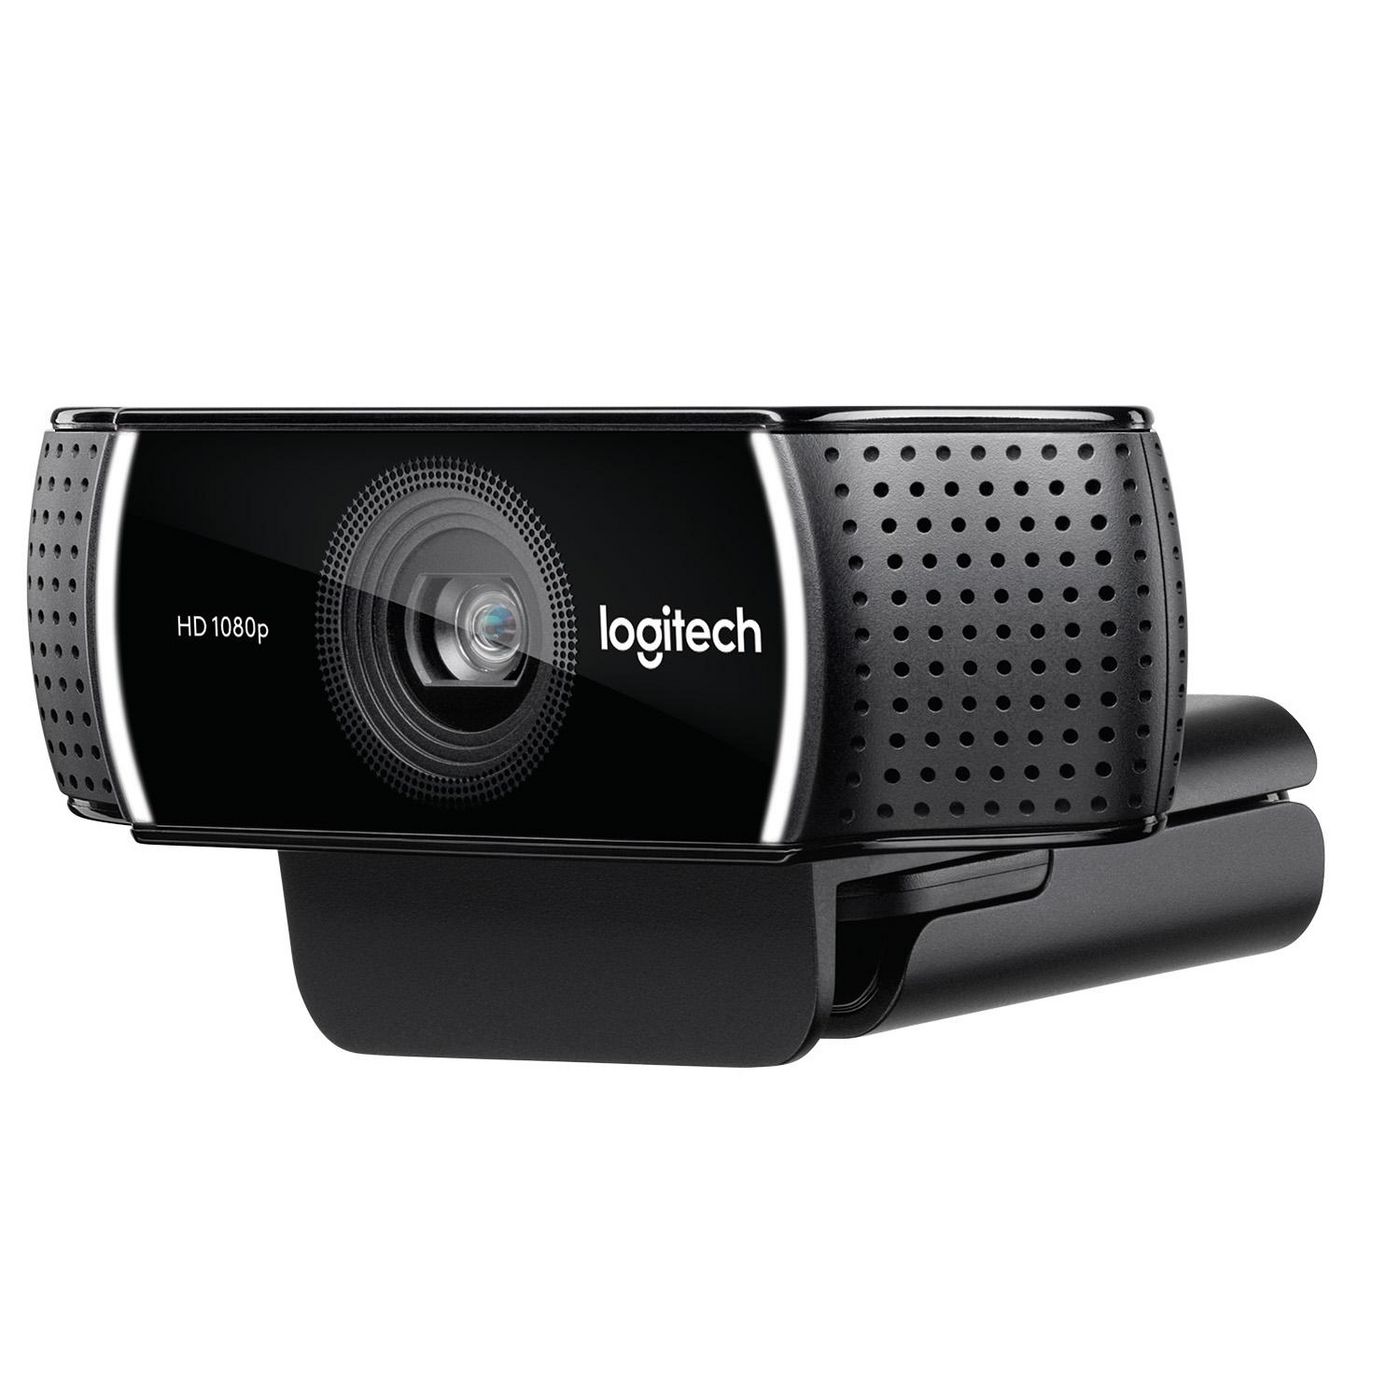 eksplicit reb fælde 960-001088, Logitech C922 Pro Stream Webcam, 1080p/30fps, 720p/60fps,  H.264, Tripod, 162 g | EET